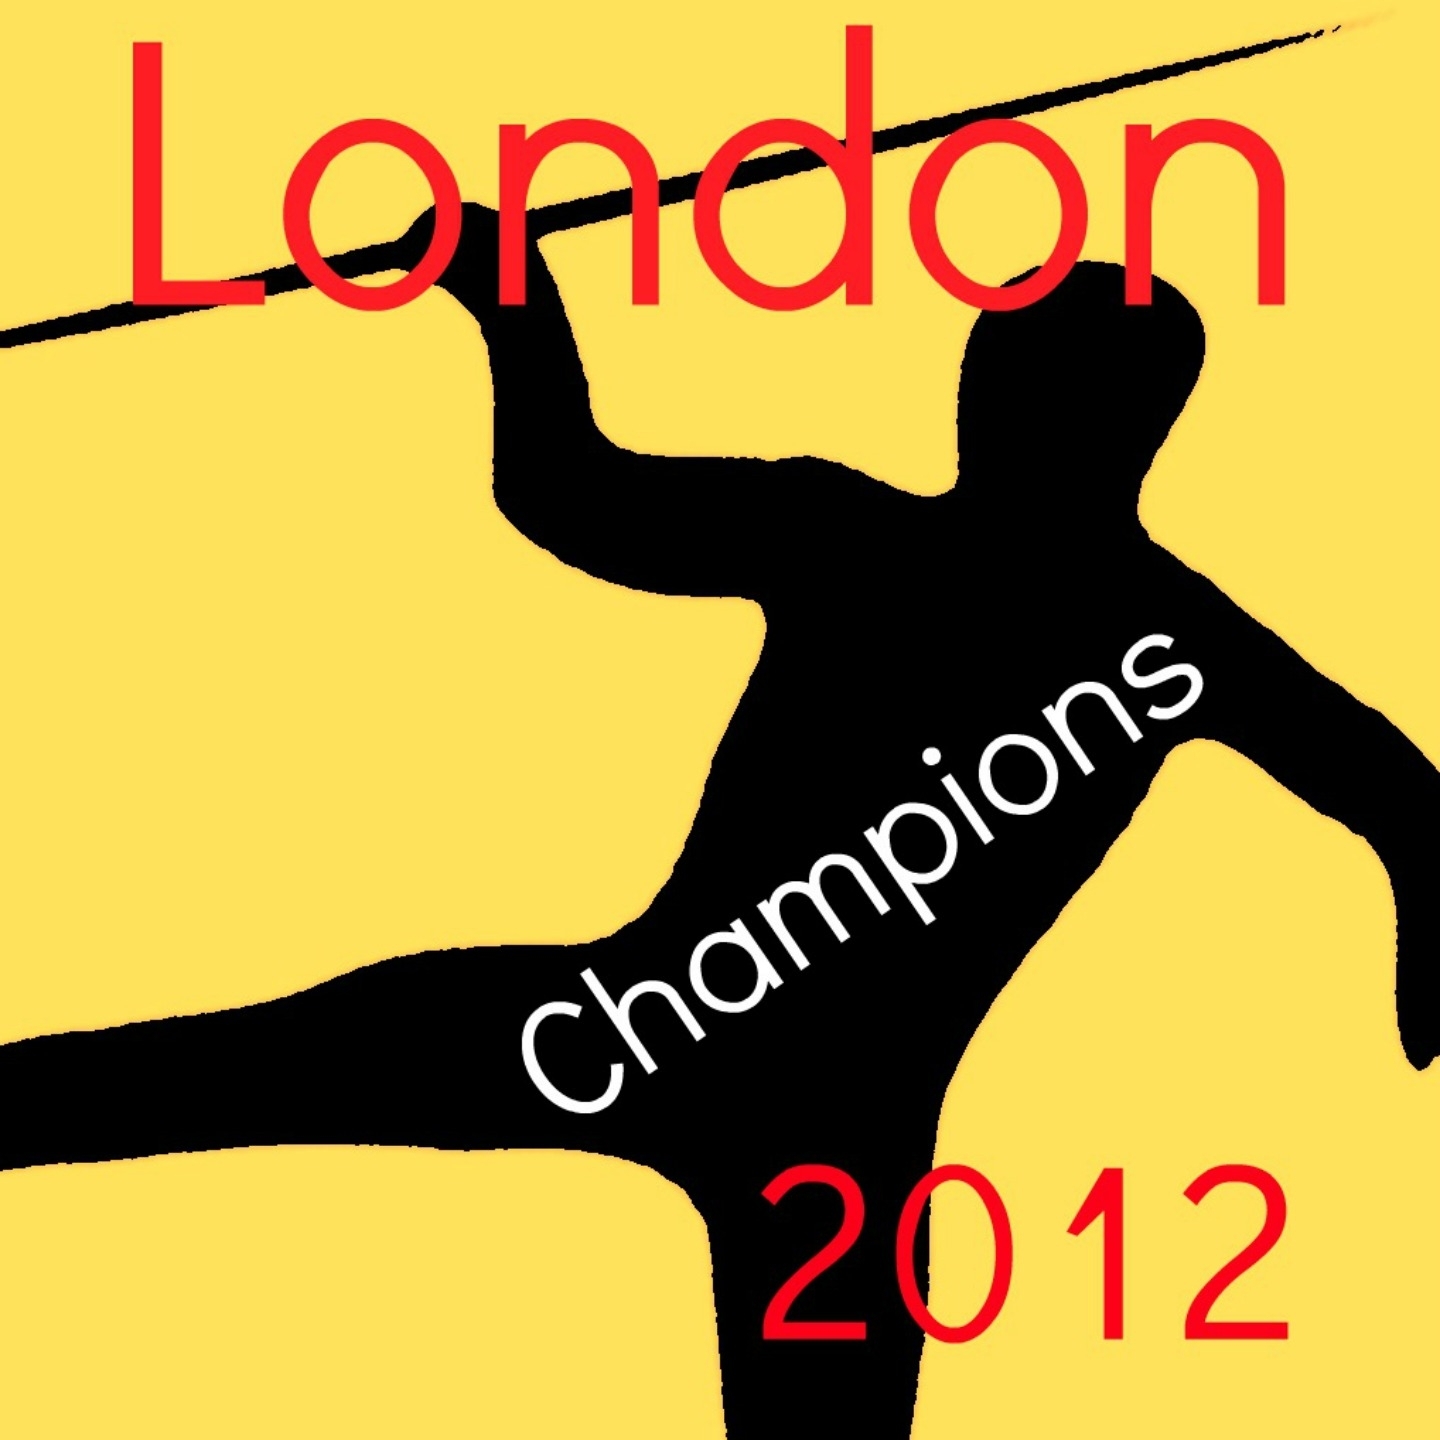 London Champions 2012